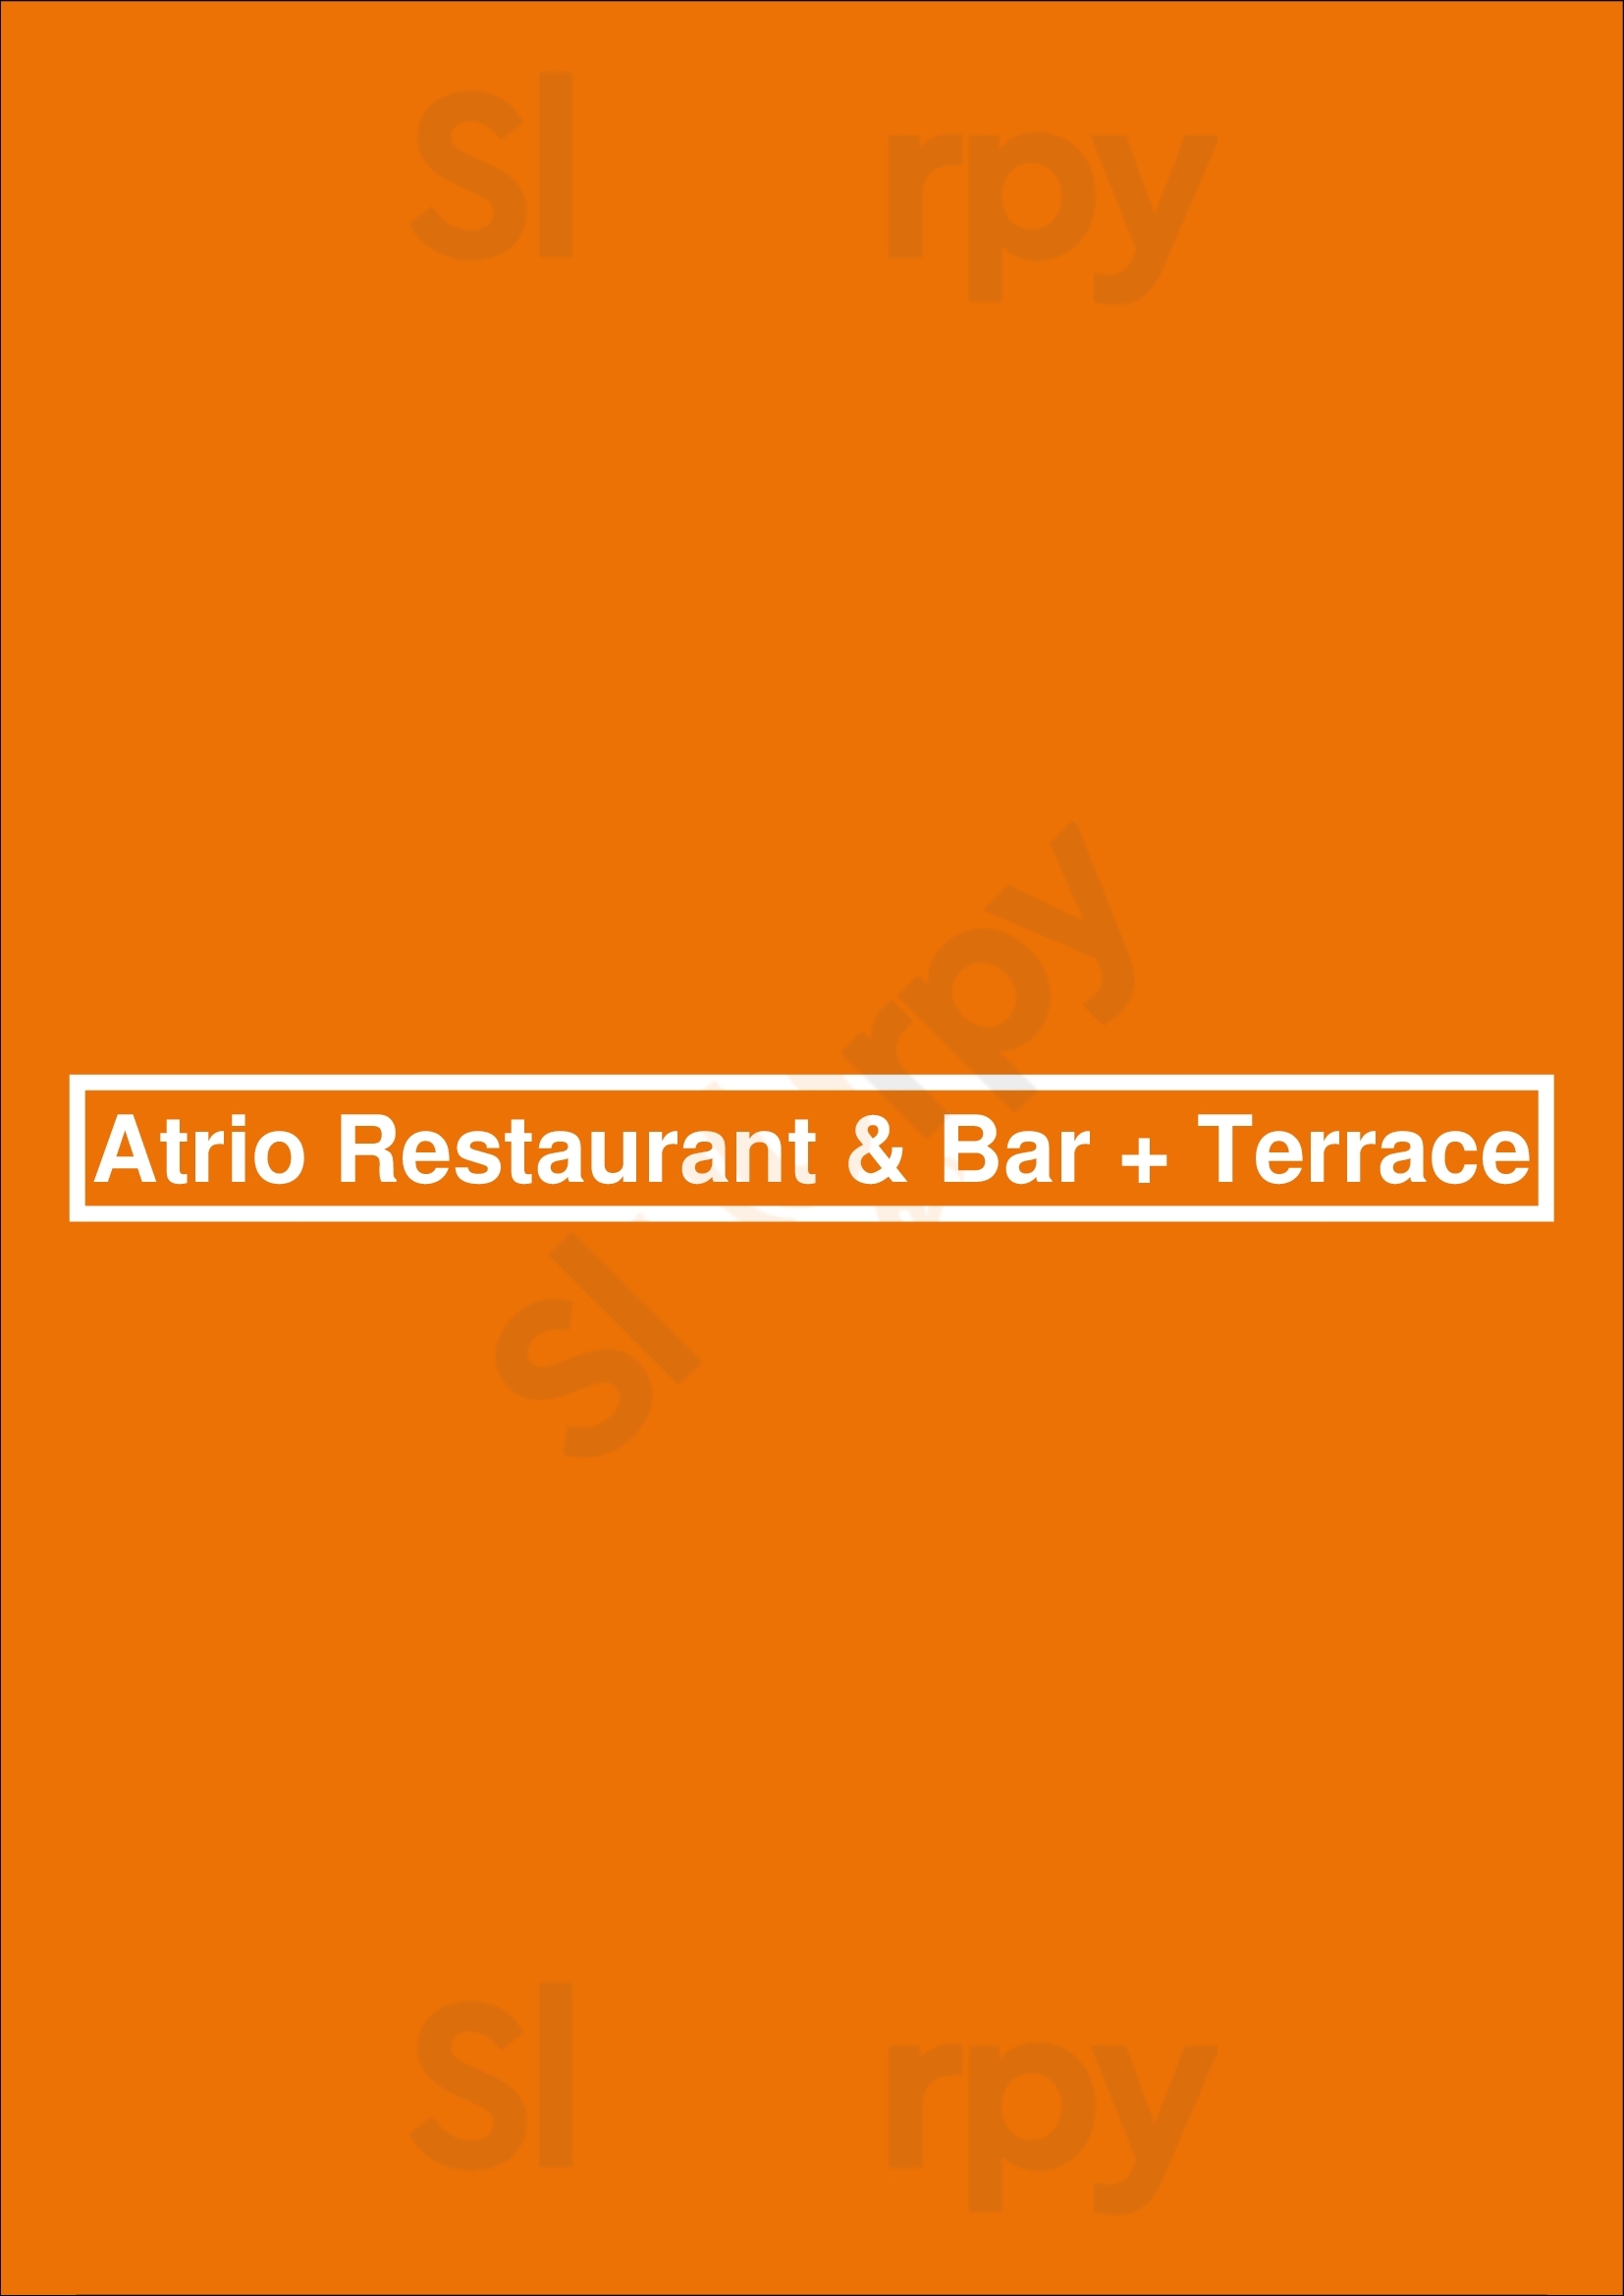 Atrio Restaurant & Bar + Terrace Bruxelles Menu - 1